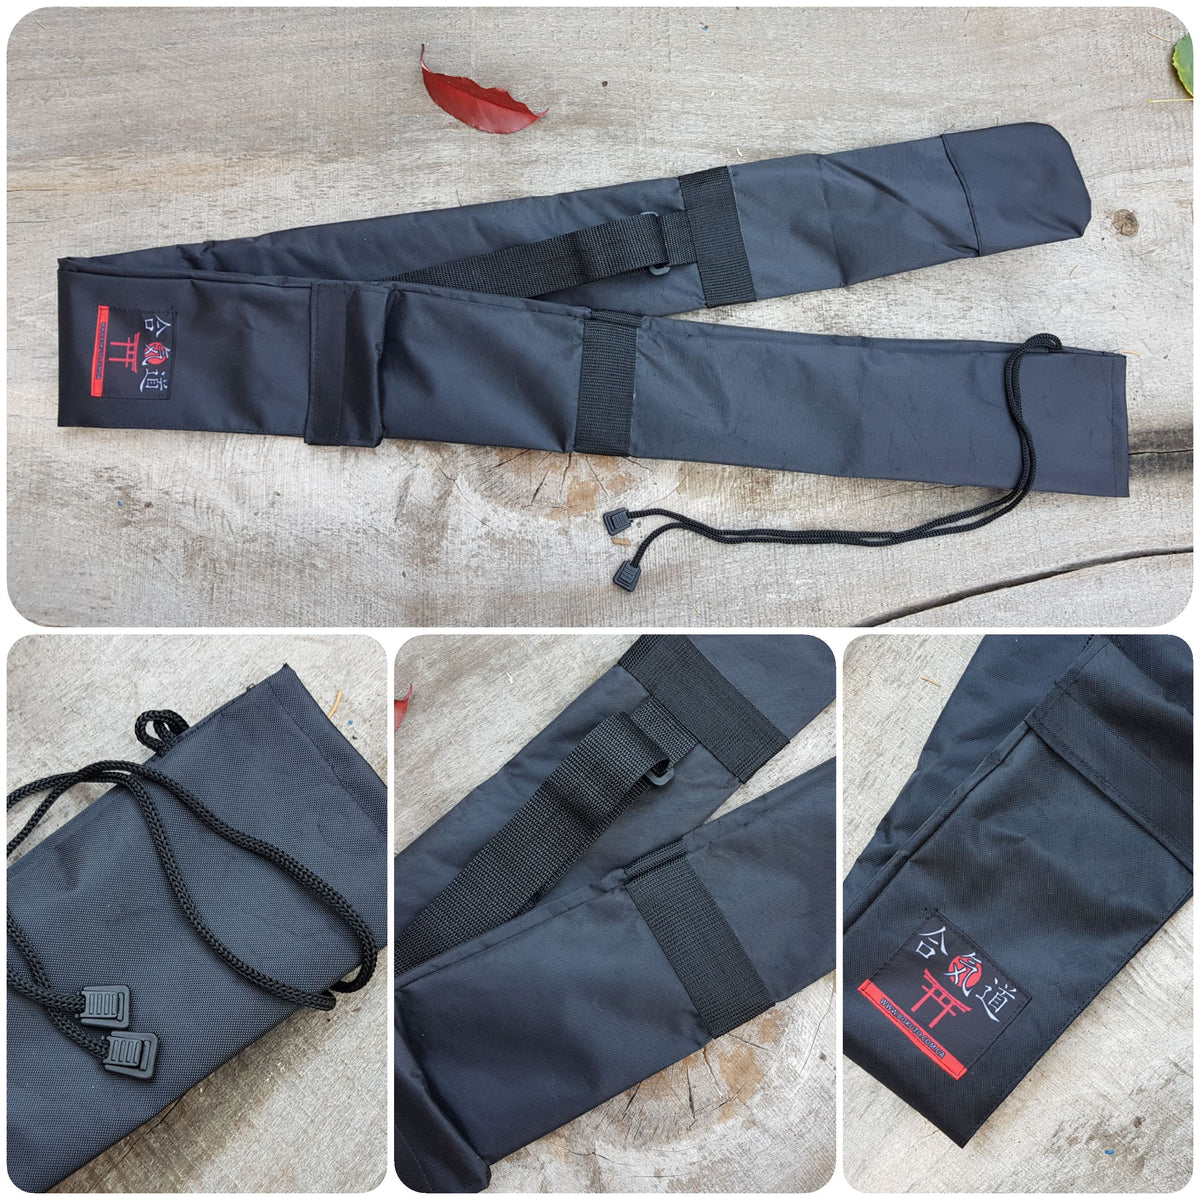 Carry case bag Bokuto Deluxe with a zip lock for bokken katana